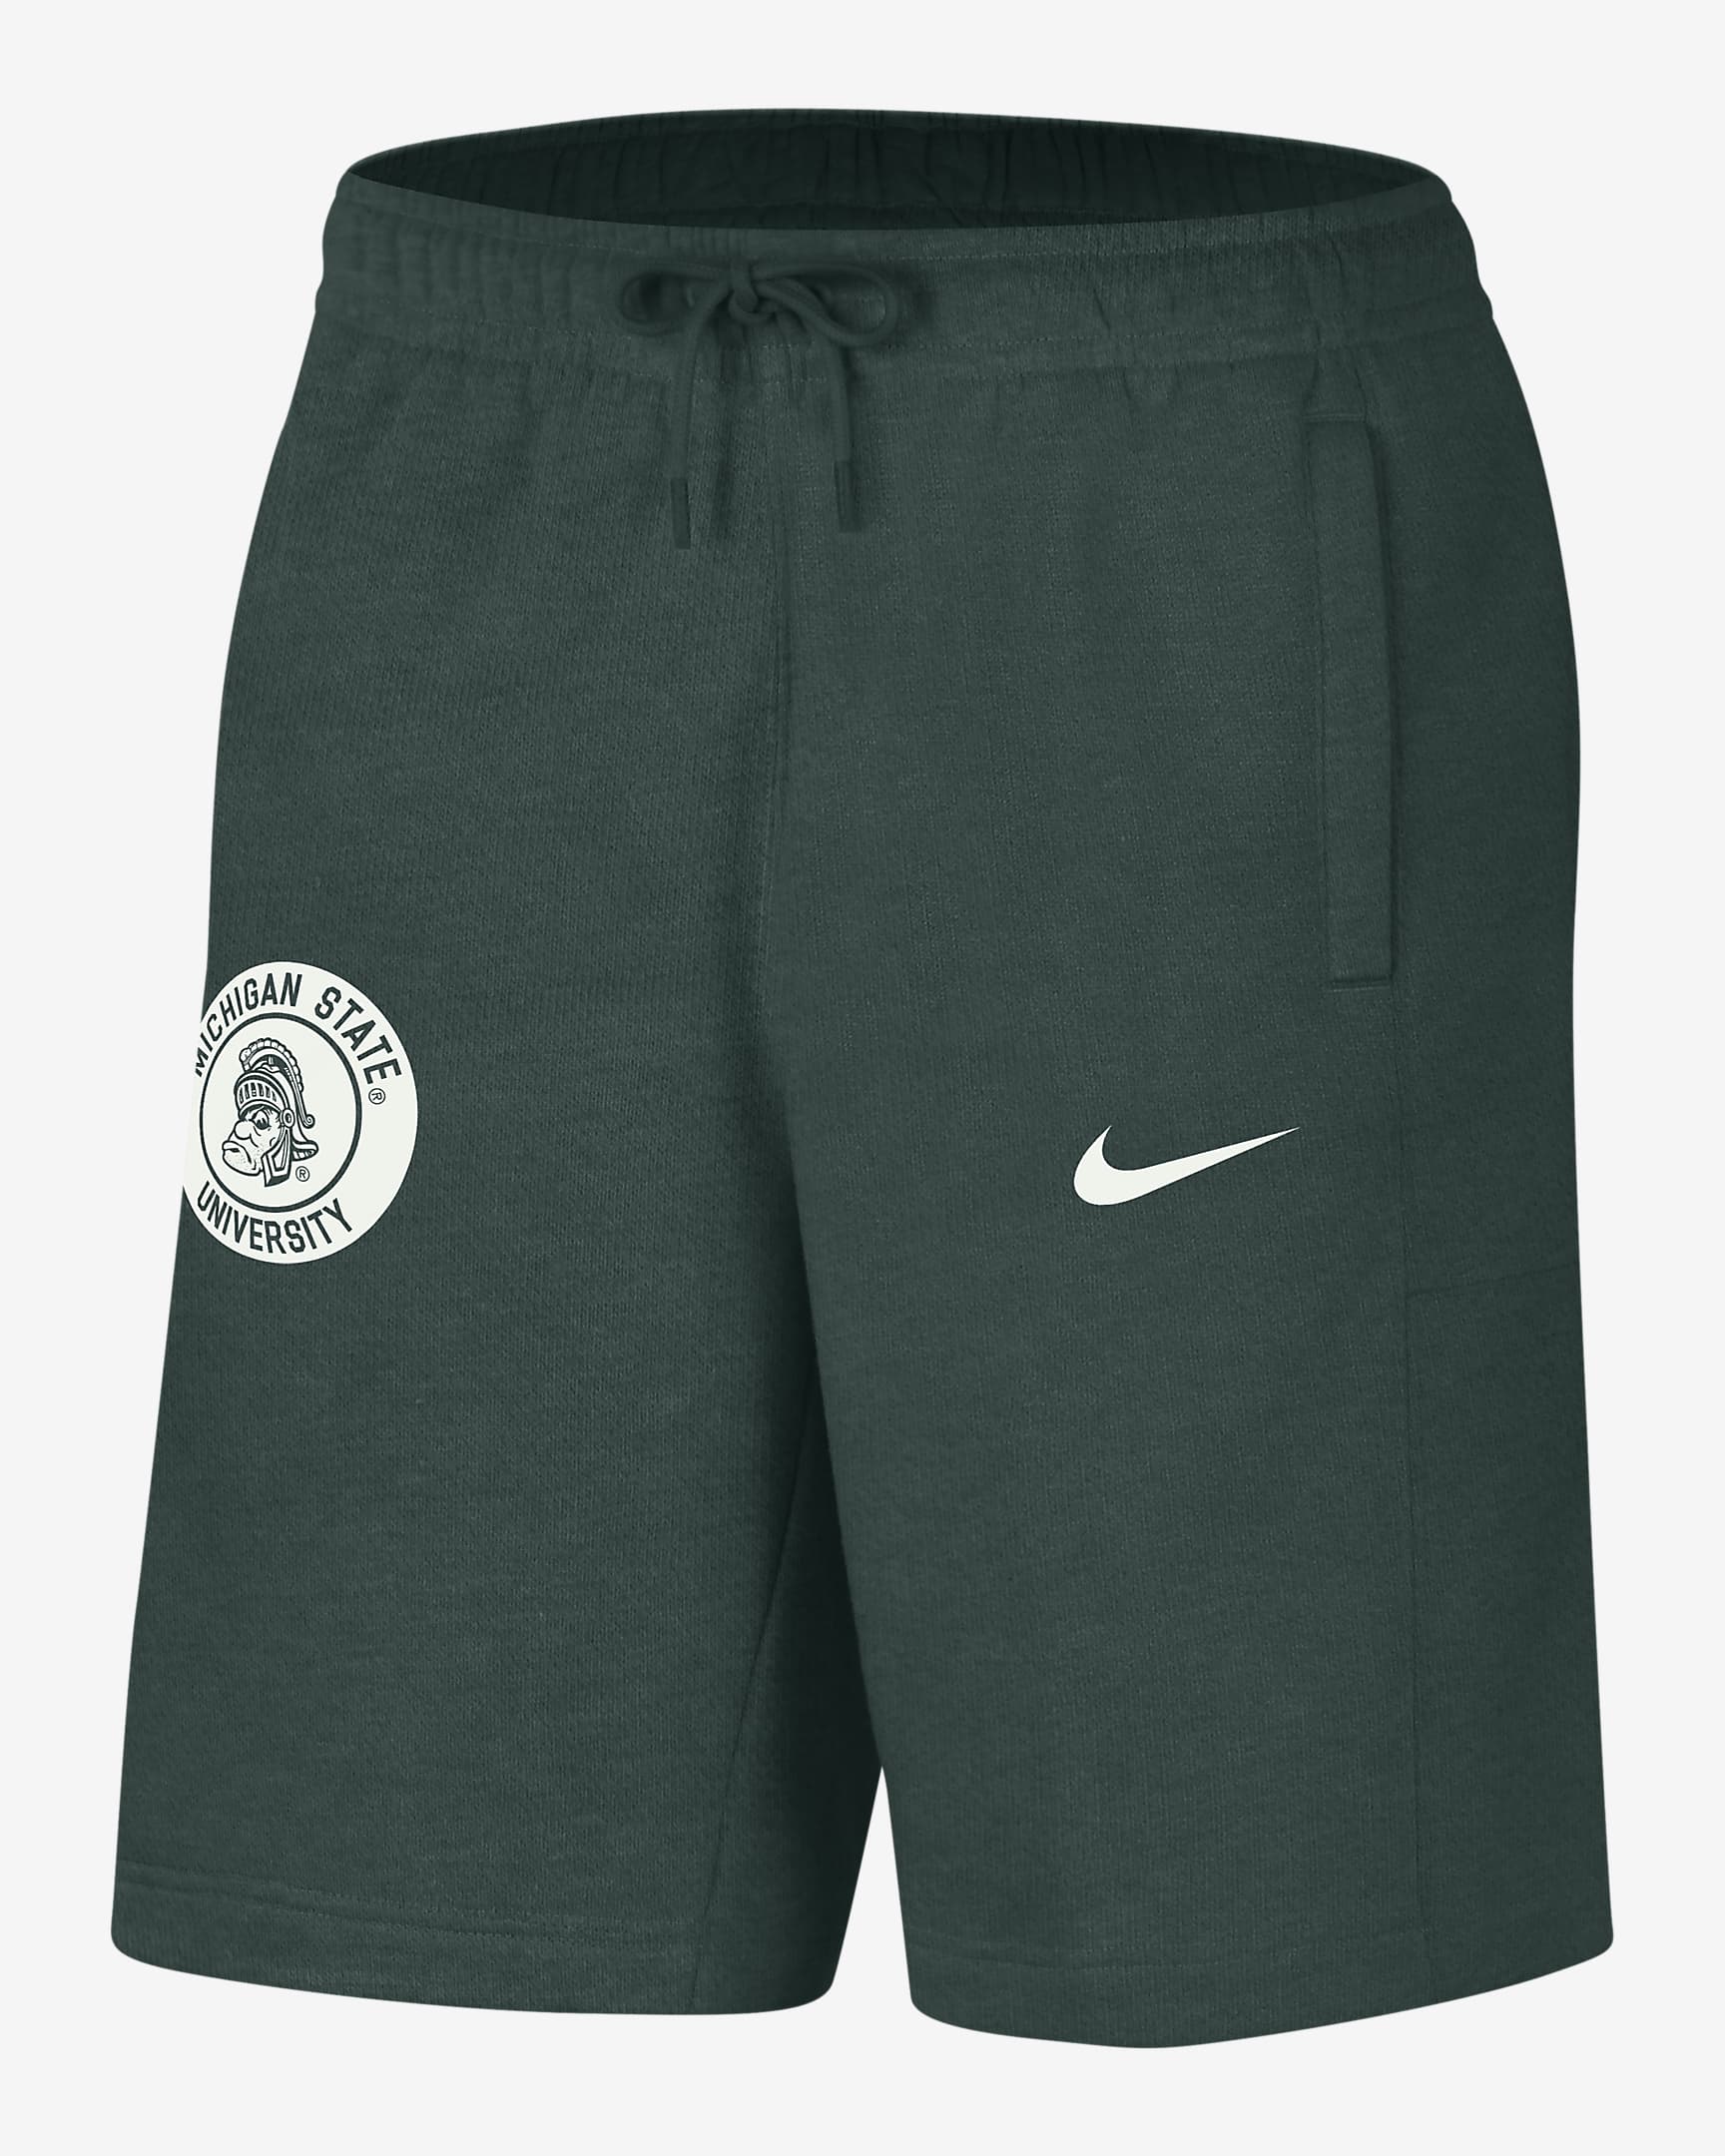 Michigan State Men's Nike College Shorts. Nike.com